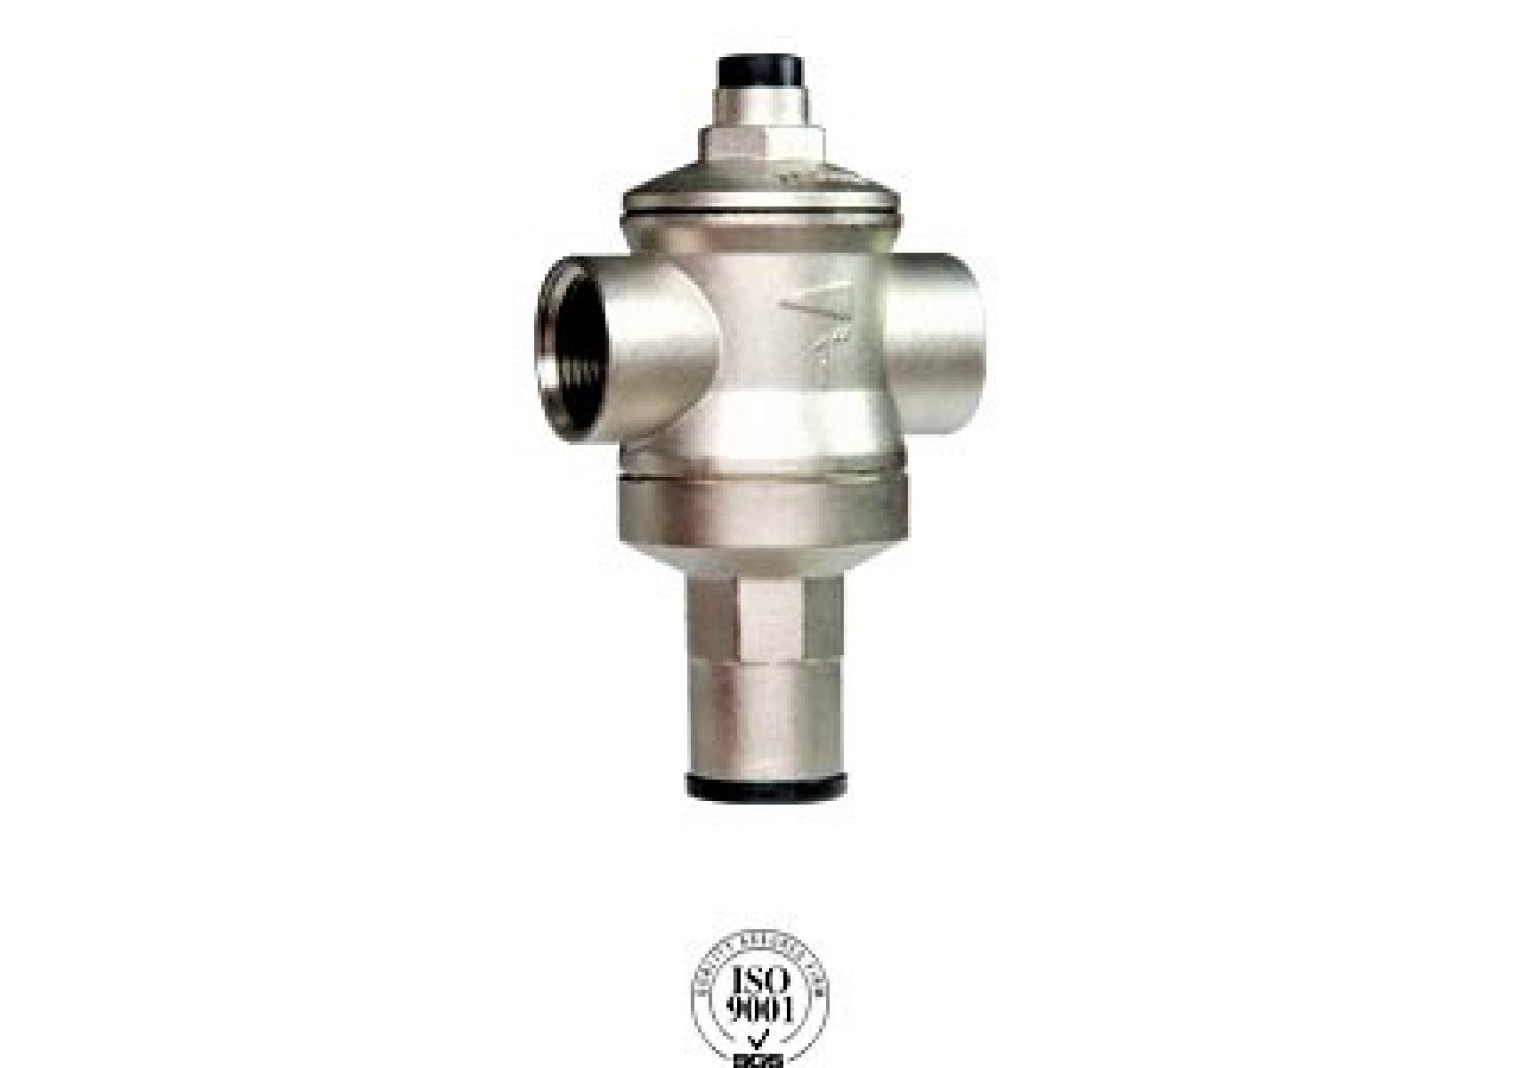 Pressure regulating valve F38-50